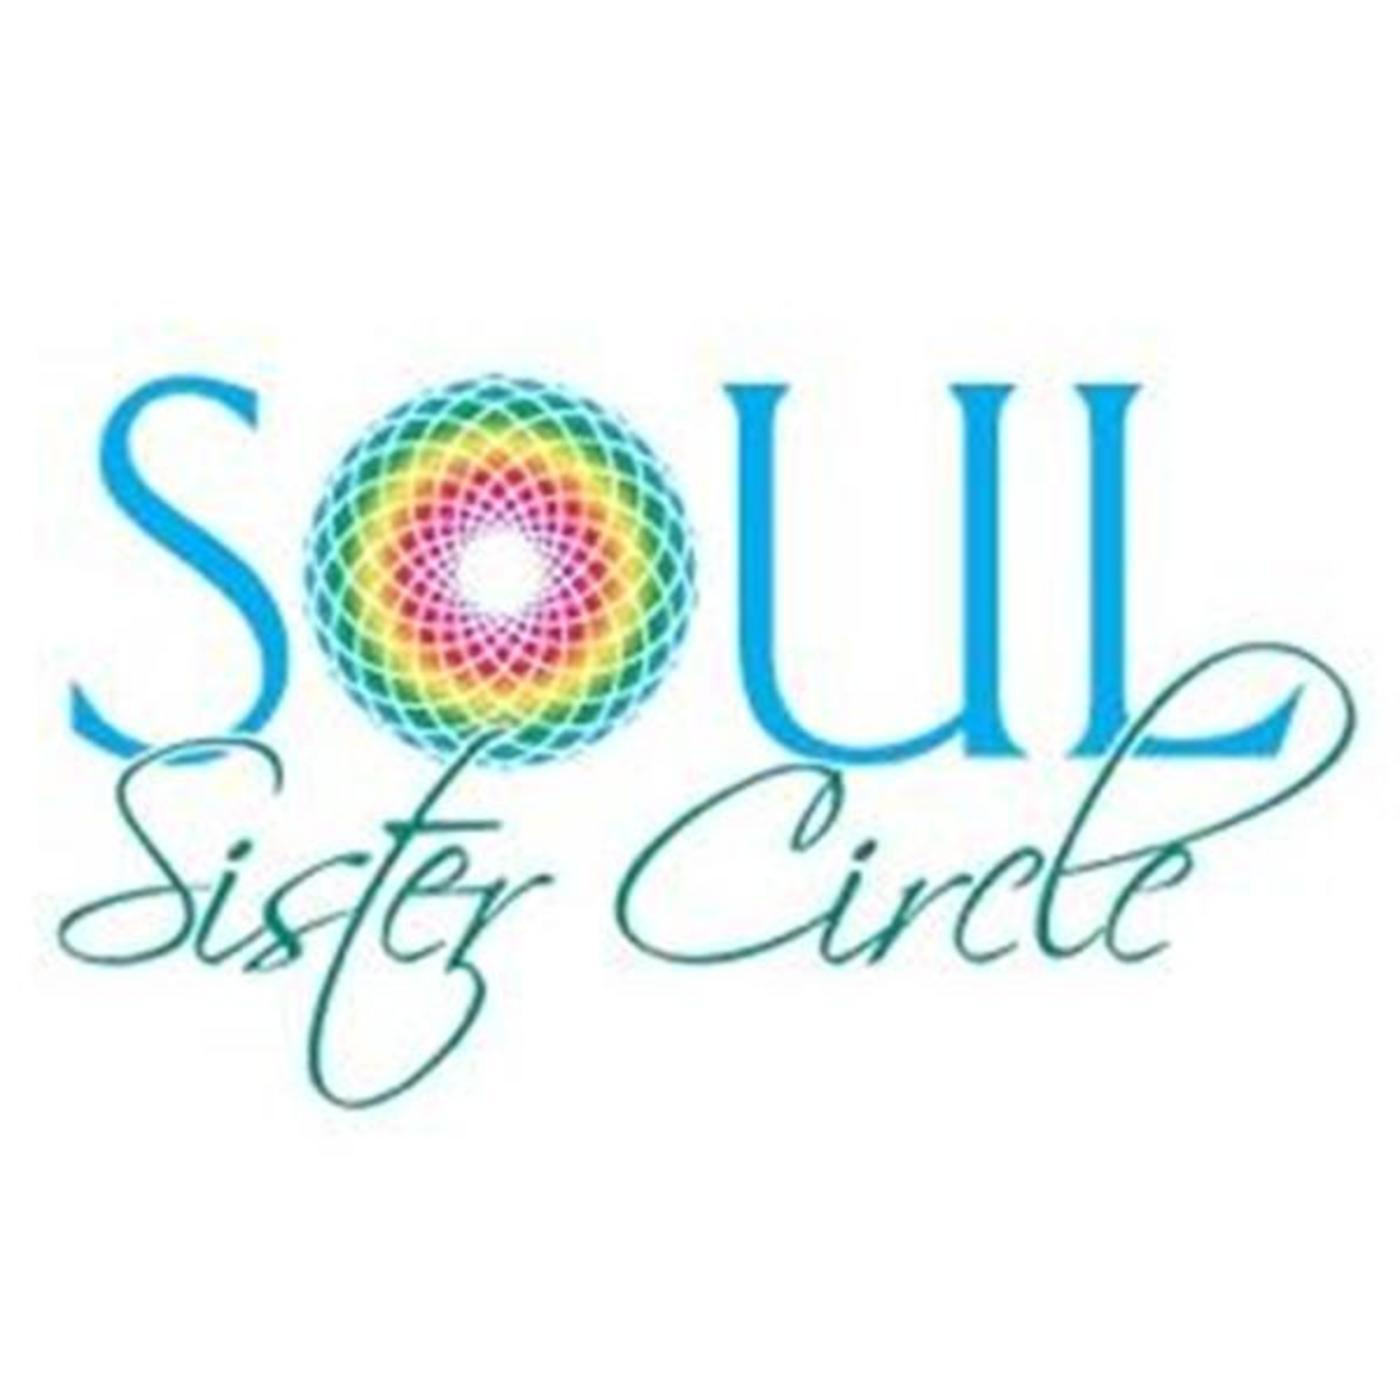 Sister Circle Logo - pod. fanatic. Podcast: Soul Sister Circle